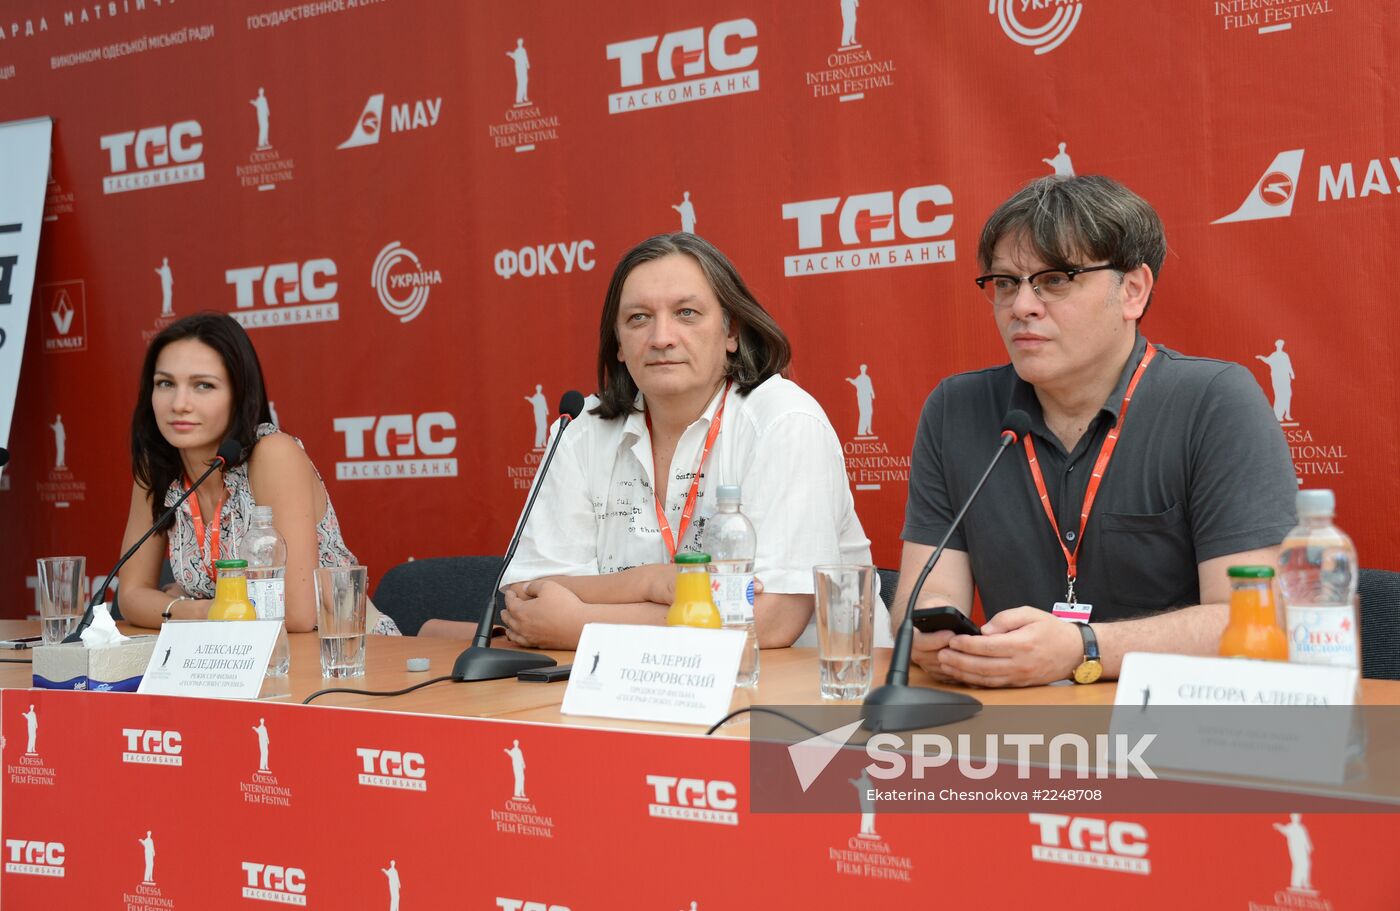 2013 Odessa International Film Festival. Day Eight